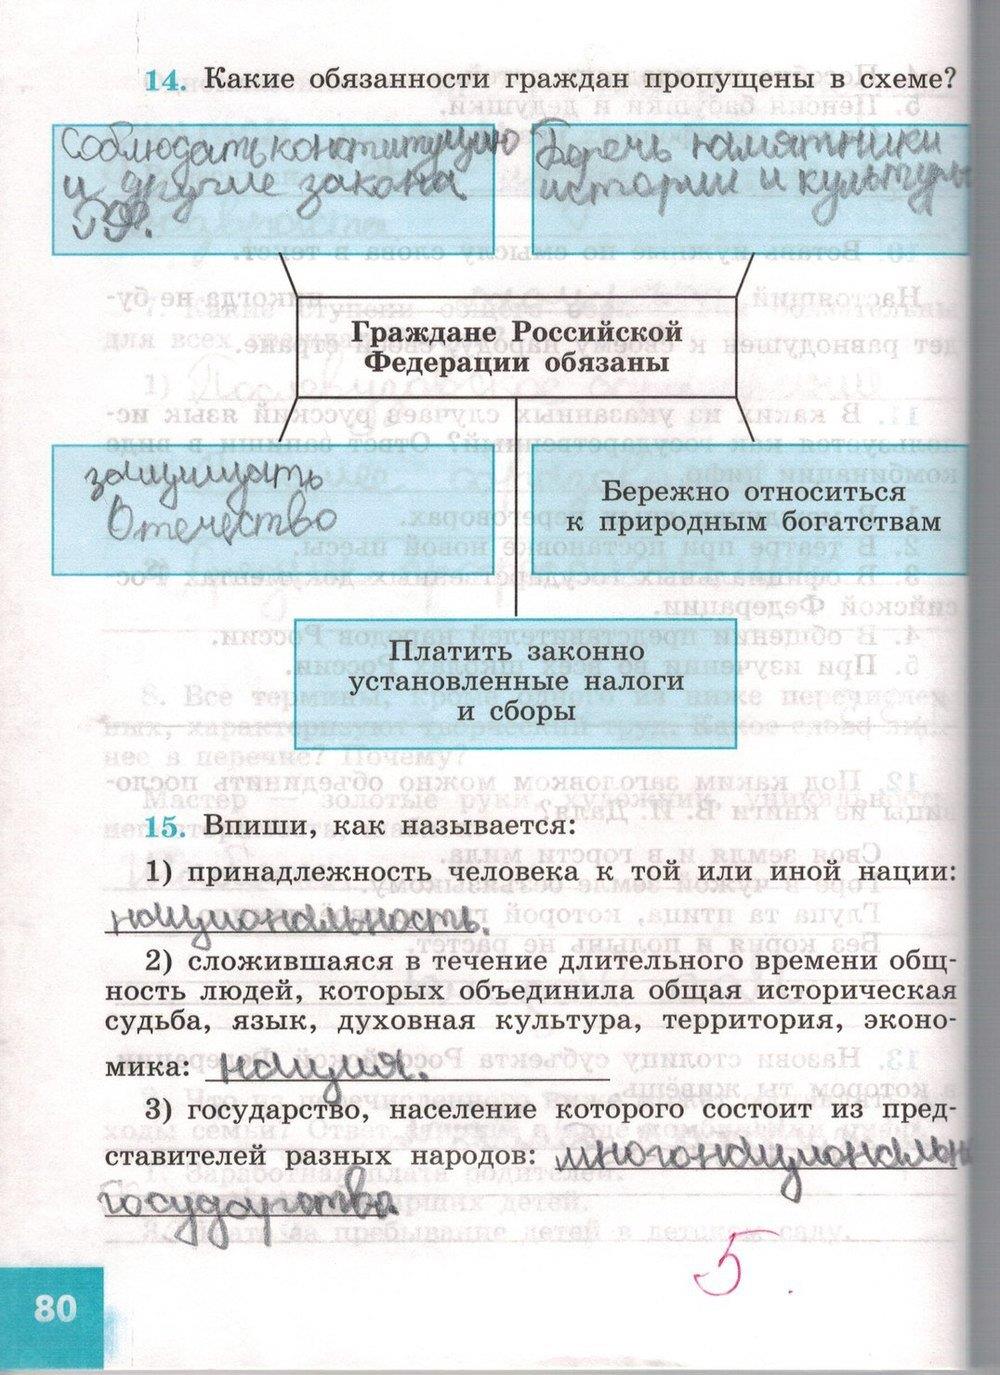 гдз 5 класс рабочая тетрадь страница 80 обществознание Иванова, Хотеенкова